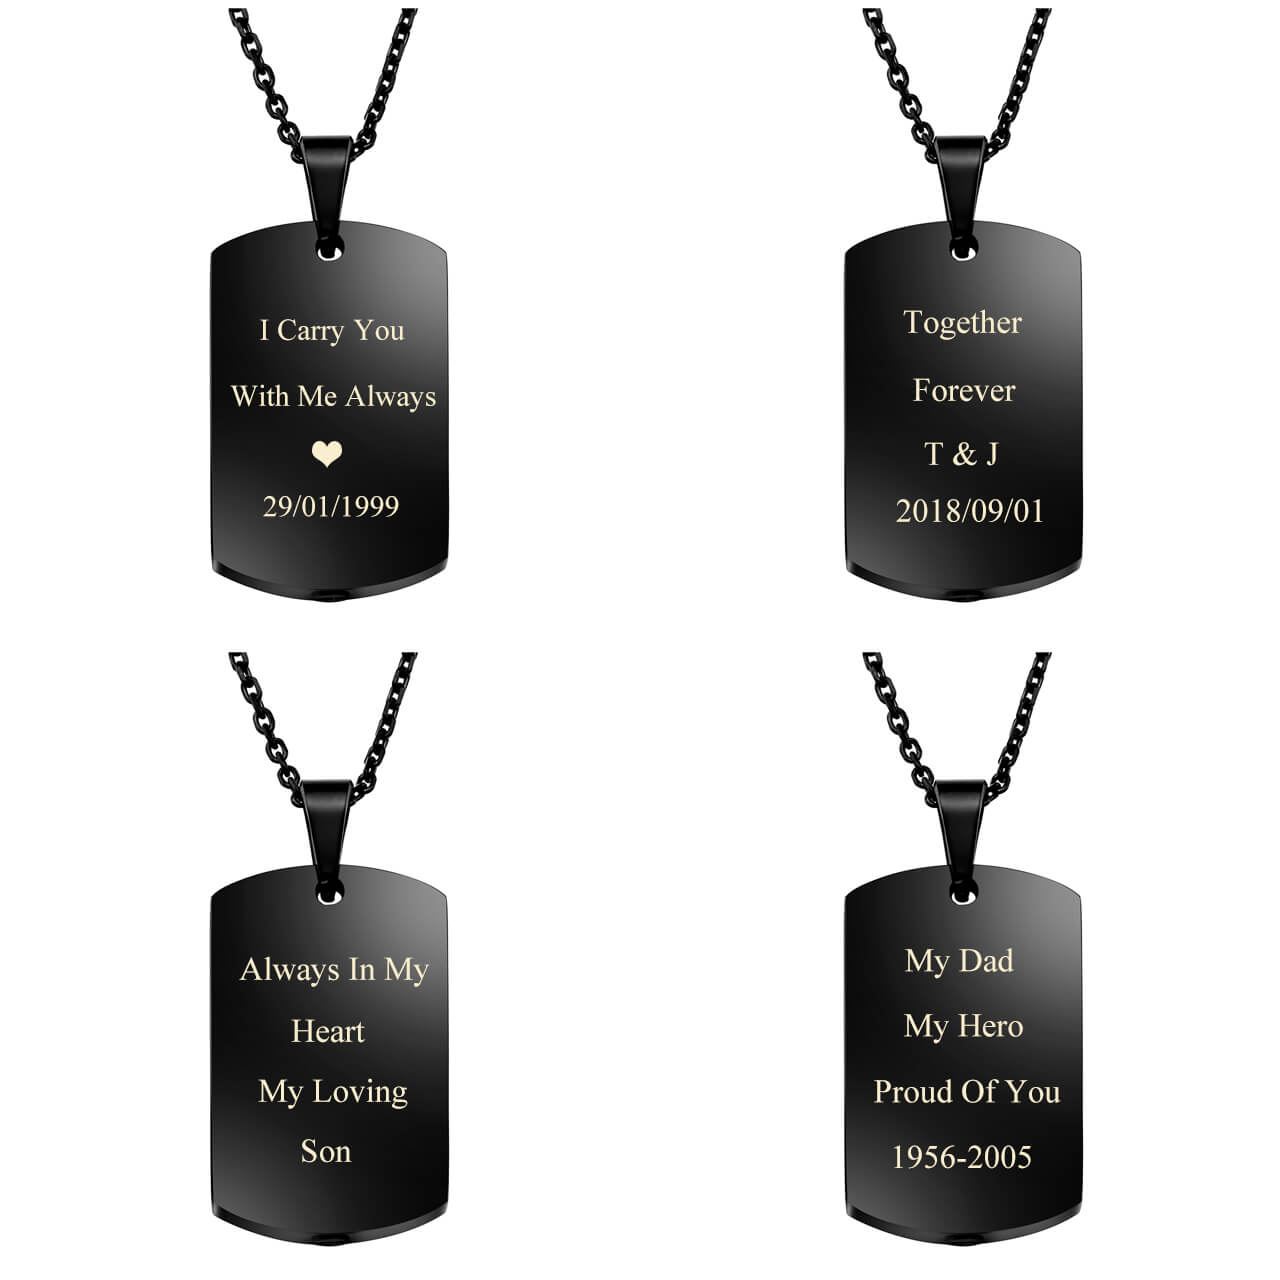 jovivi customized name message ashes urn necklace dog tag pendant jng058602